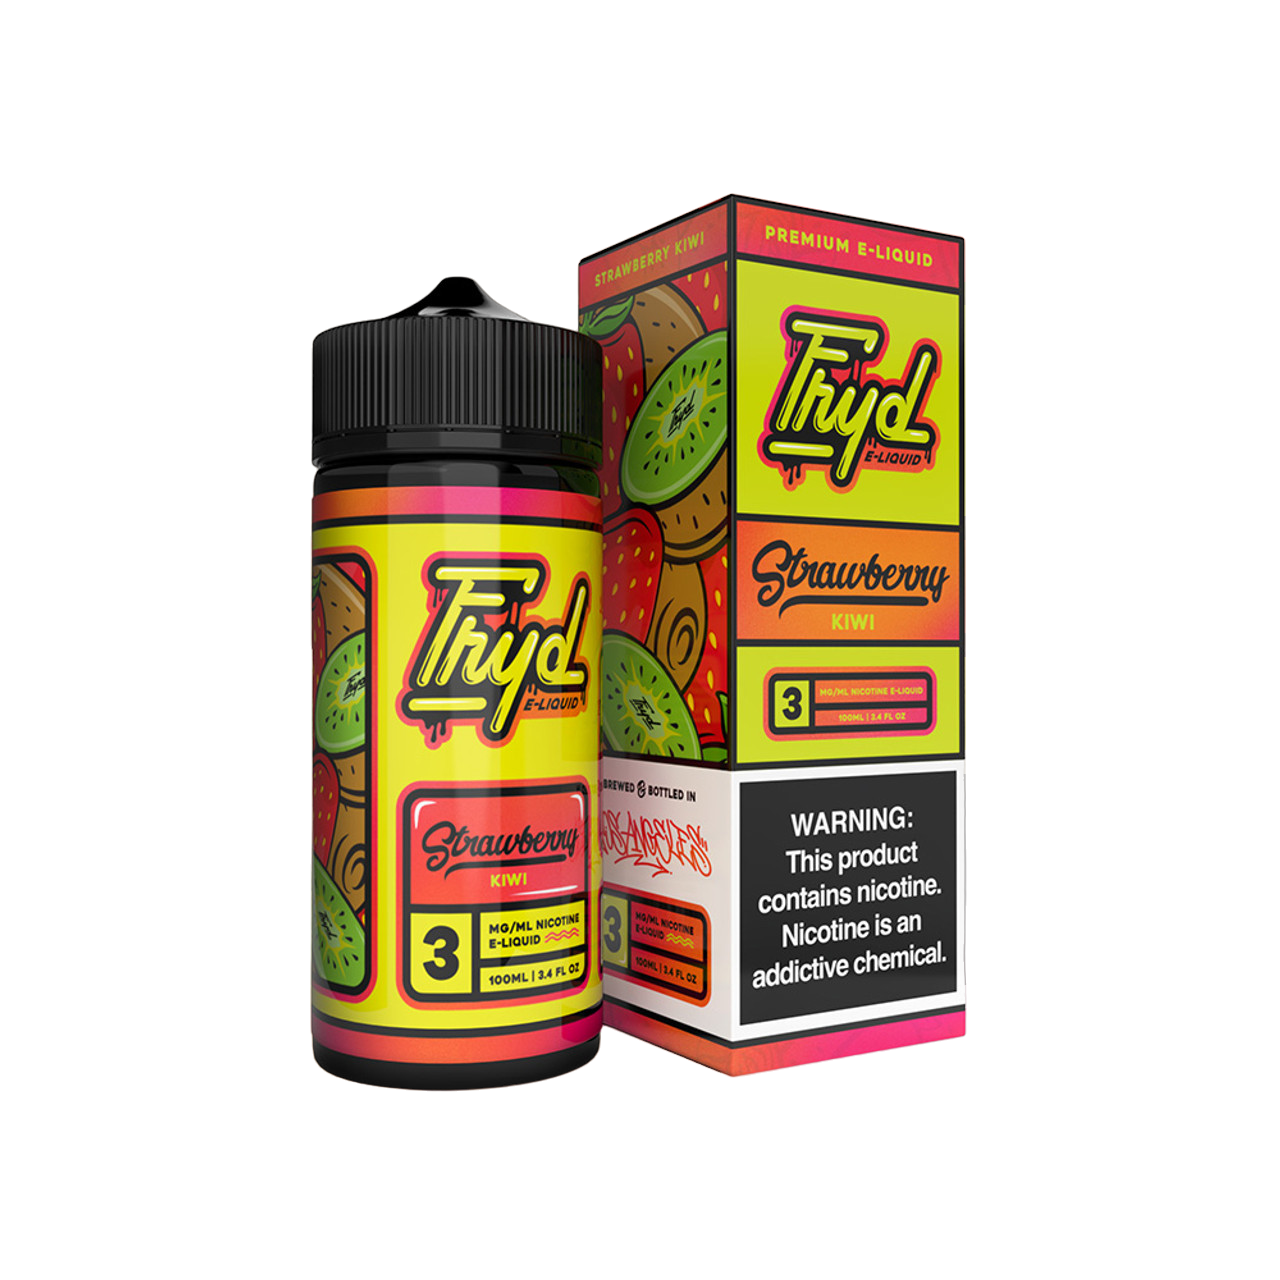 Fryd Nicotine Premium E-Liquid 100ML Strawberry Kiwi